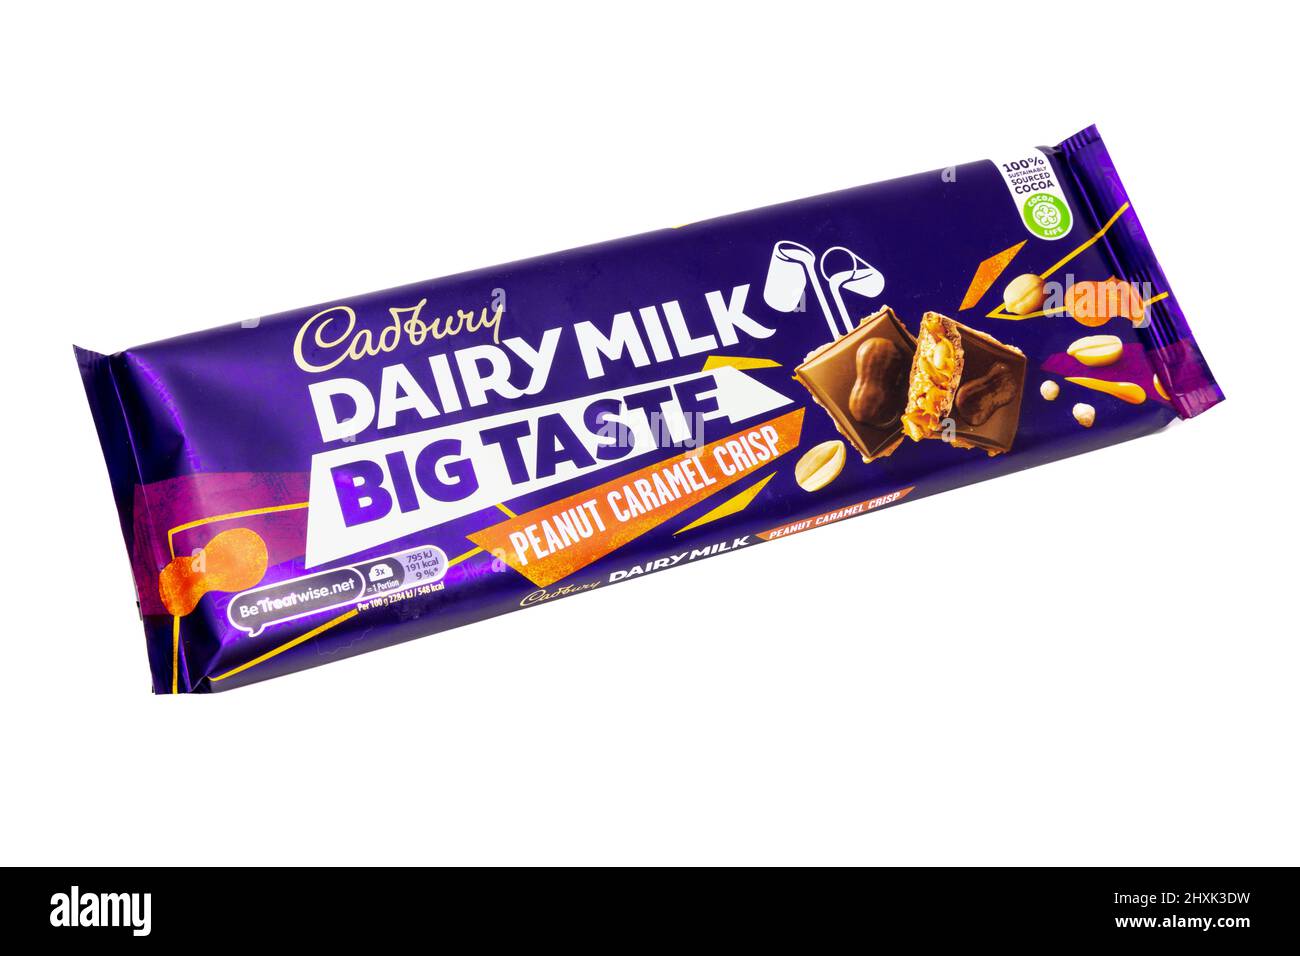 Cadbury Dairy Milk Big Taste Peanut Caramel Crisp Chocolate Bar Stock Photo